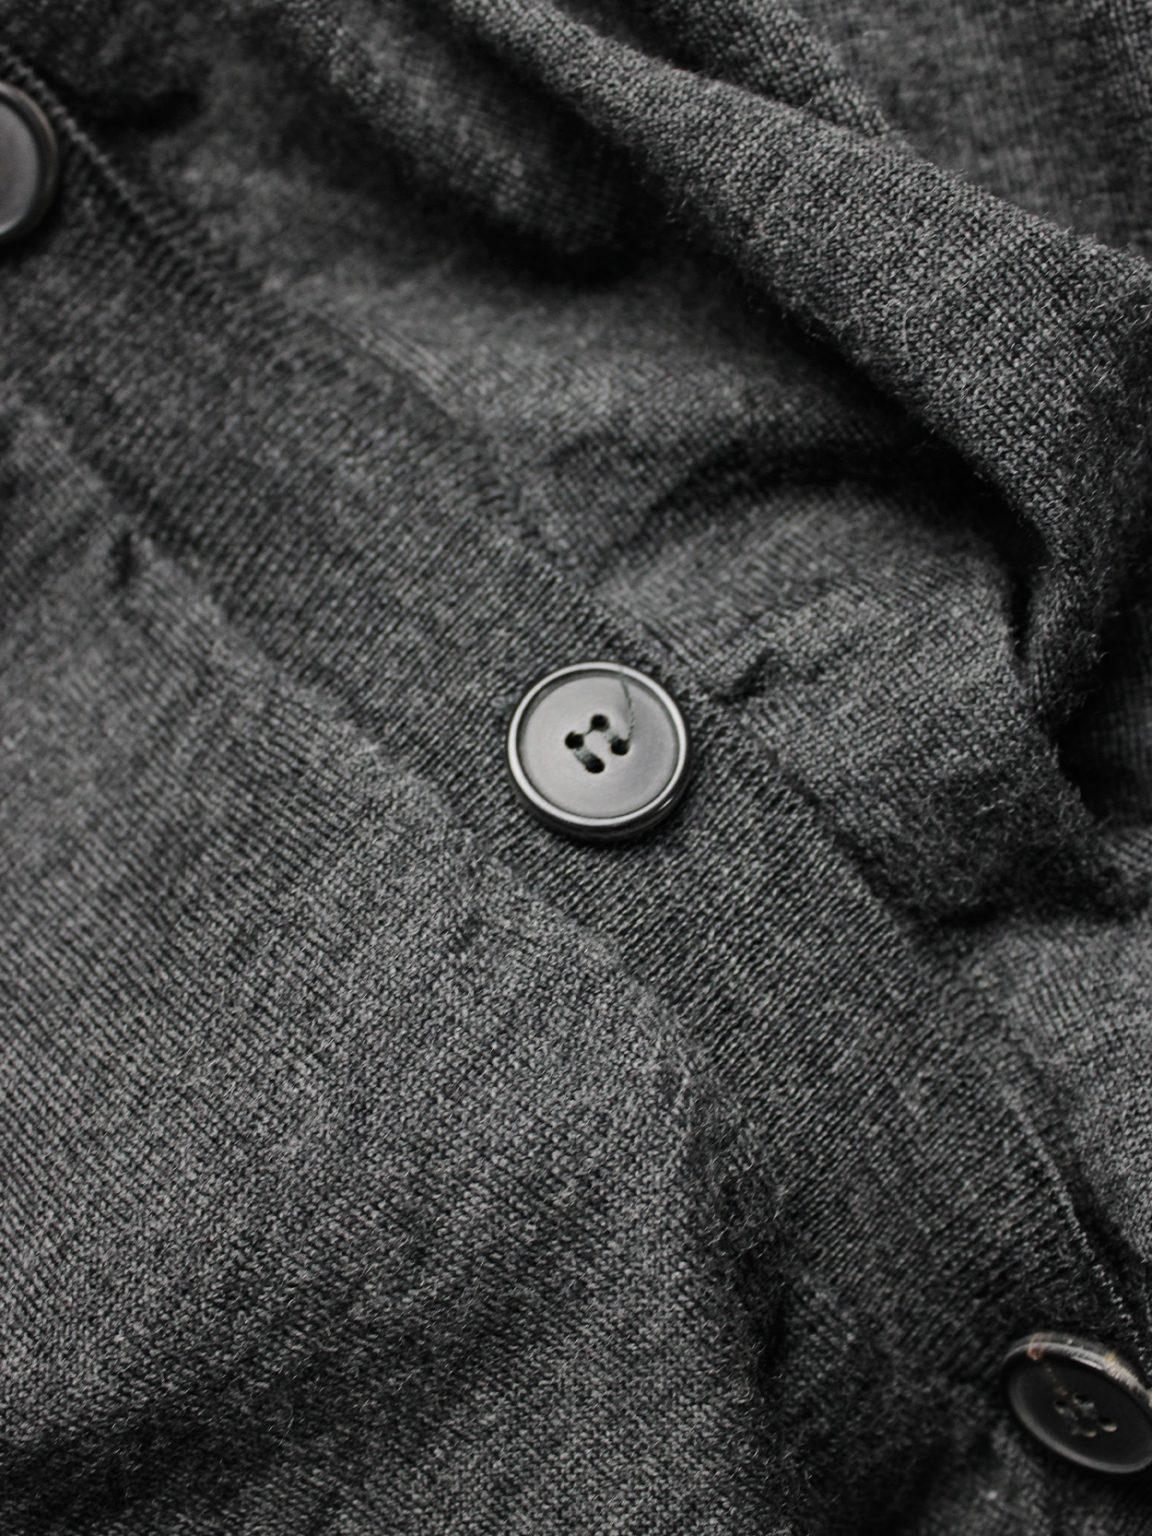 Maison Martin Margiela grey front draped cardigan with extra long sleeves — fall 2010